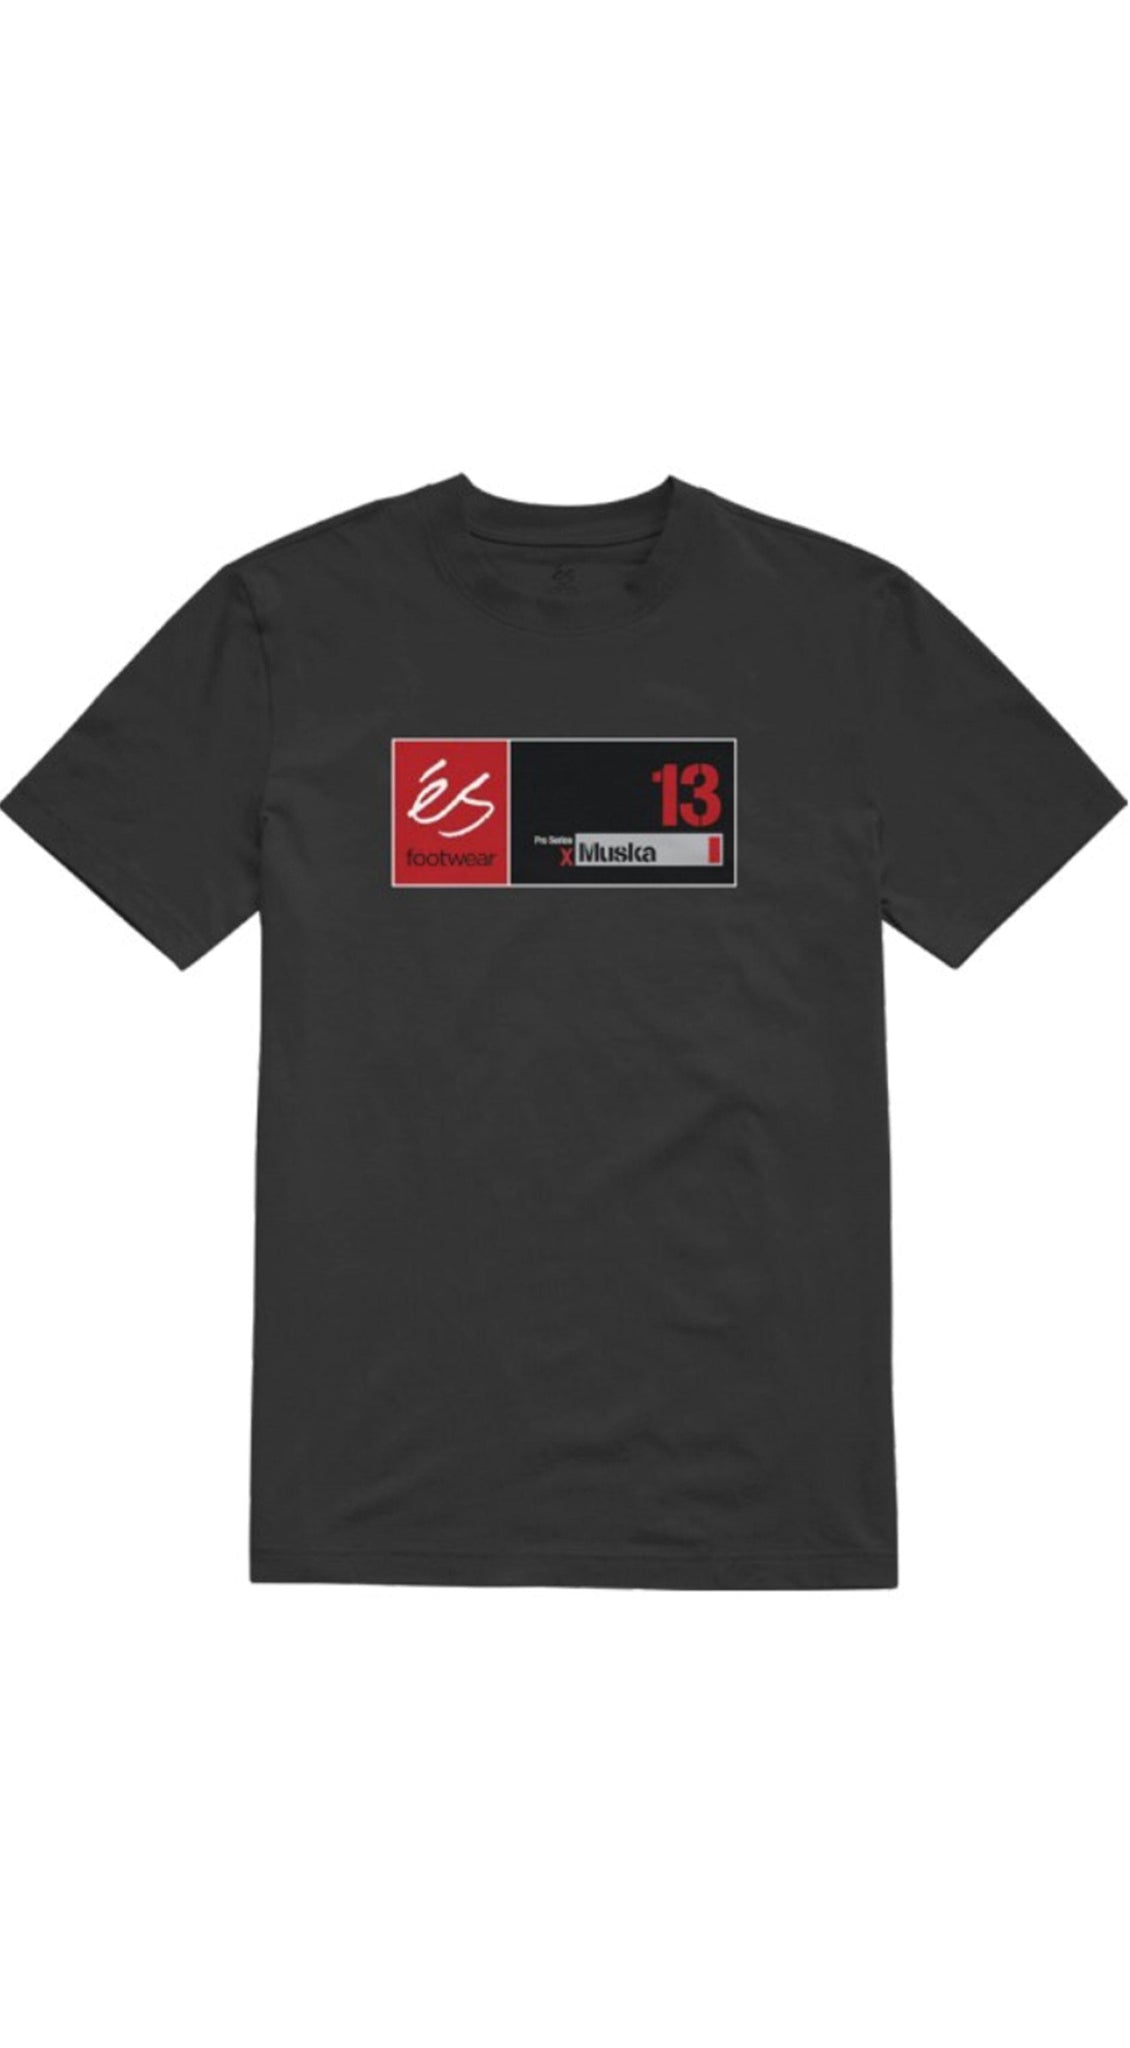 és MUSKA 13 TEE Black Tshirt- Camiseta- Prebook Ropa eS Skateboarding 